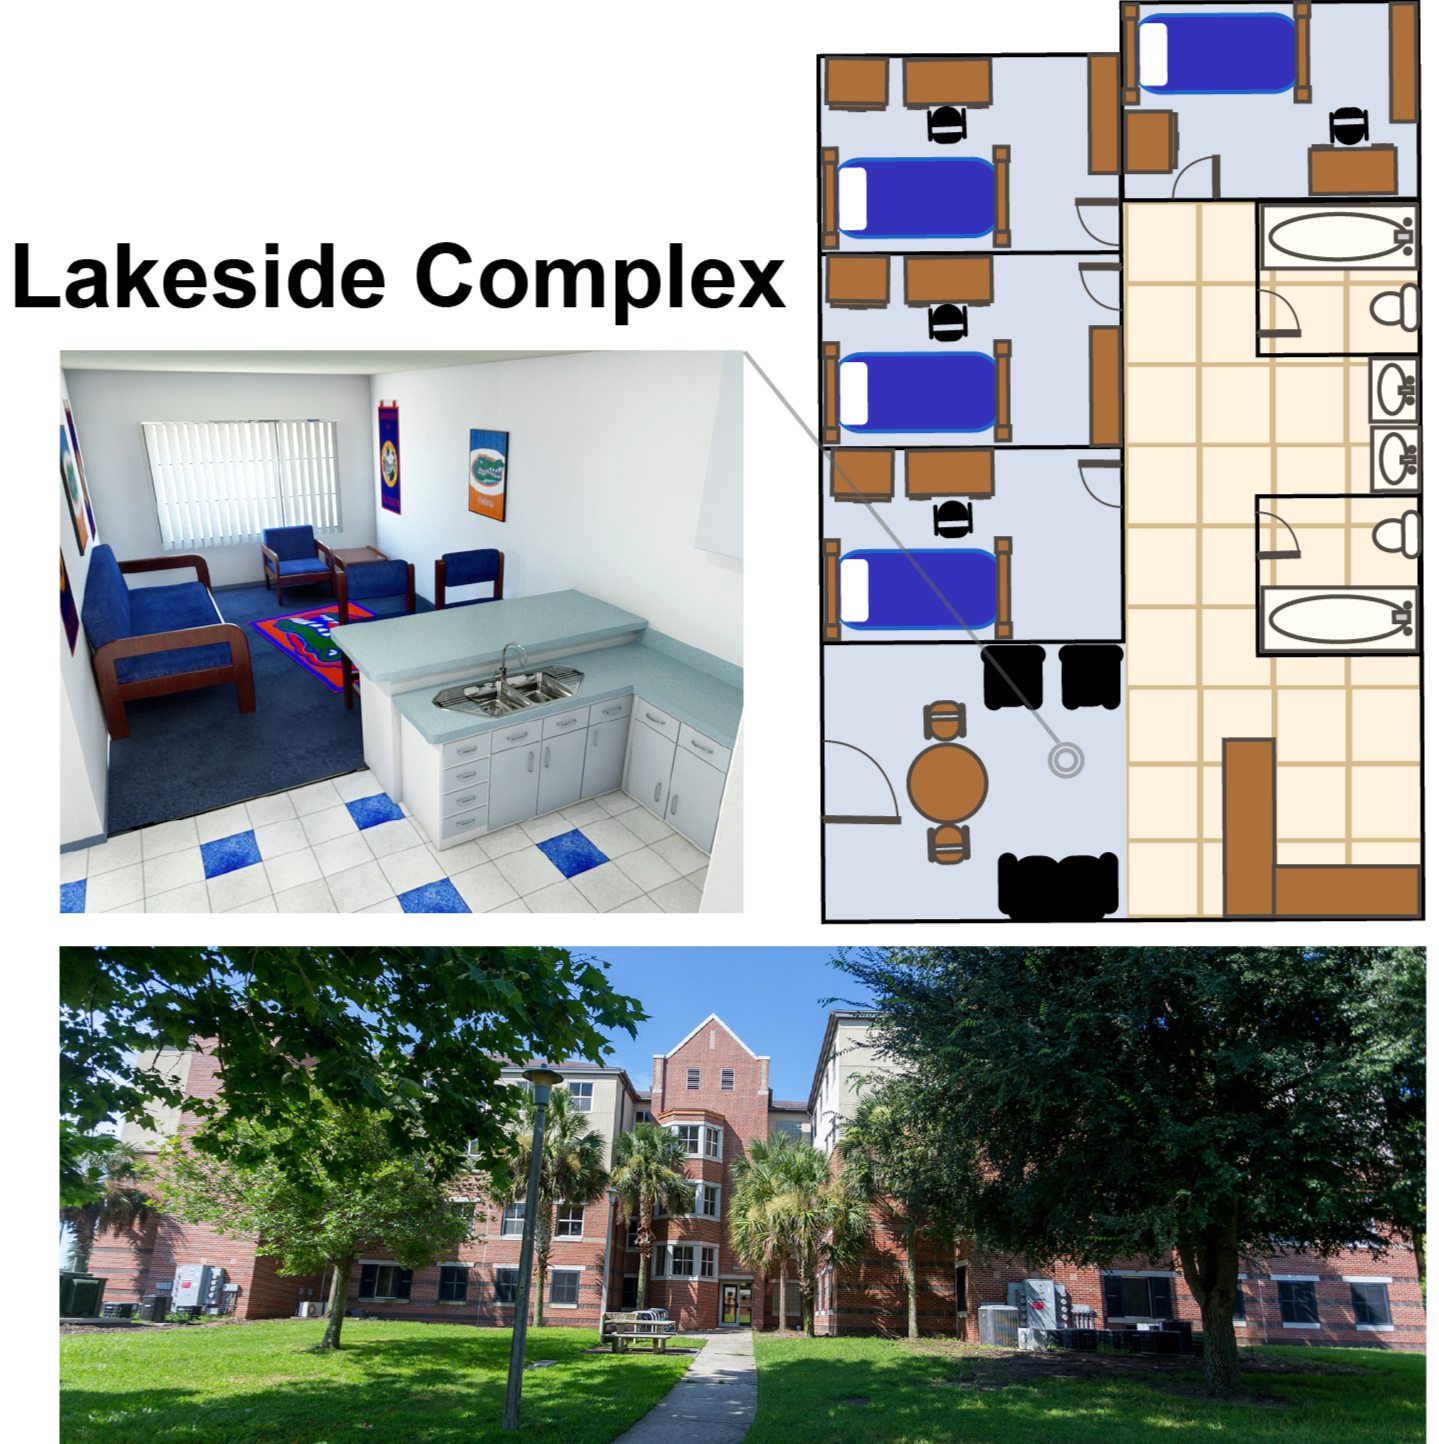 university of south florida dorm tour